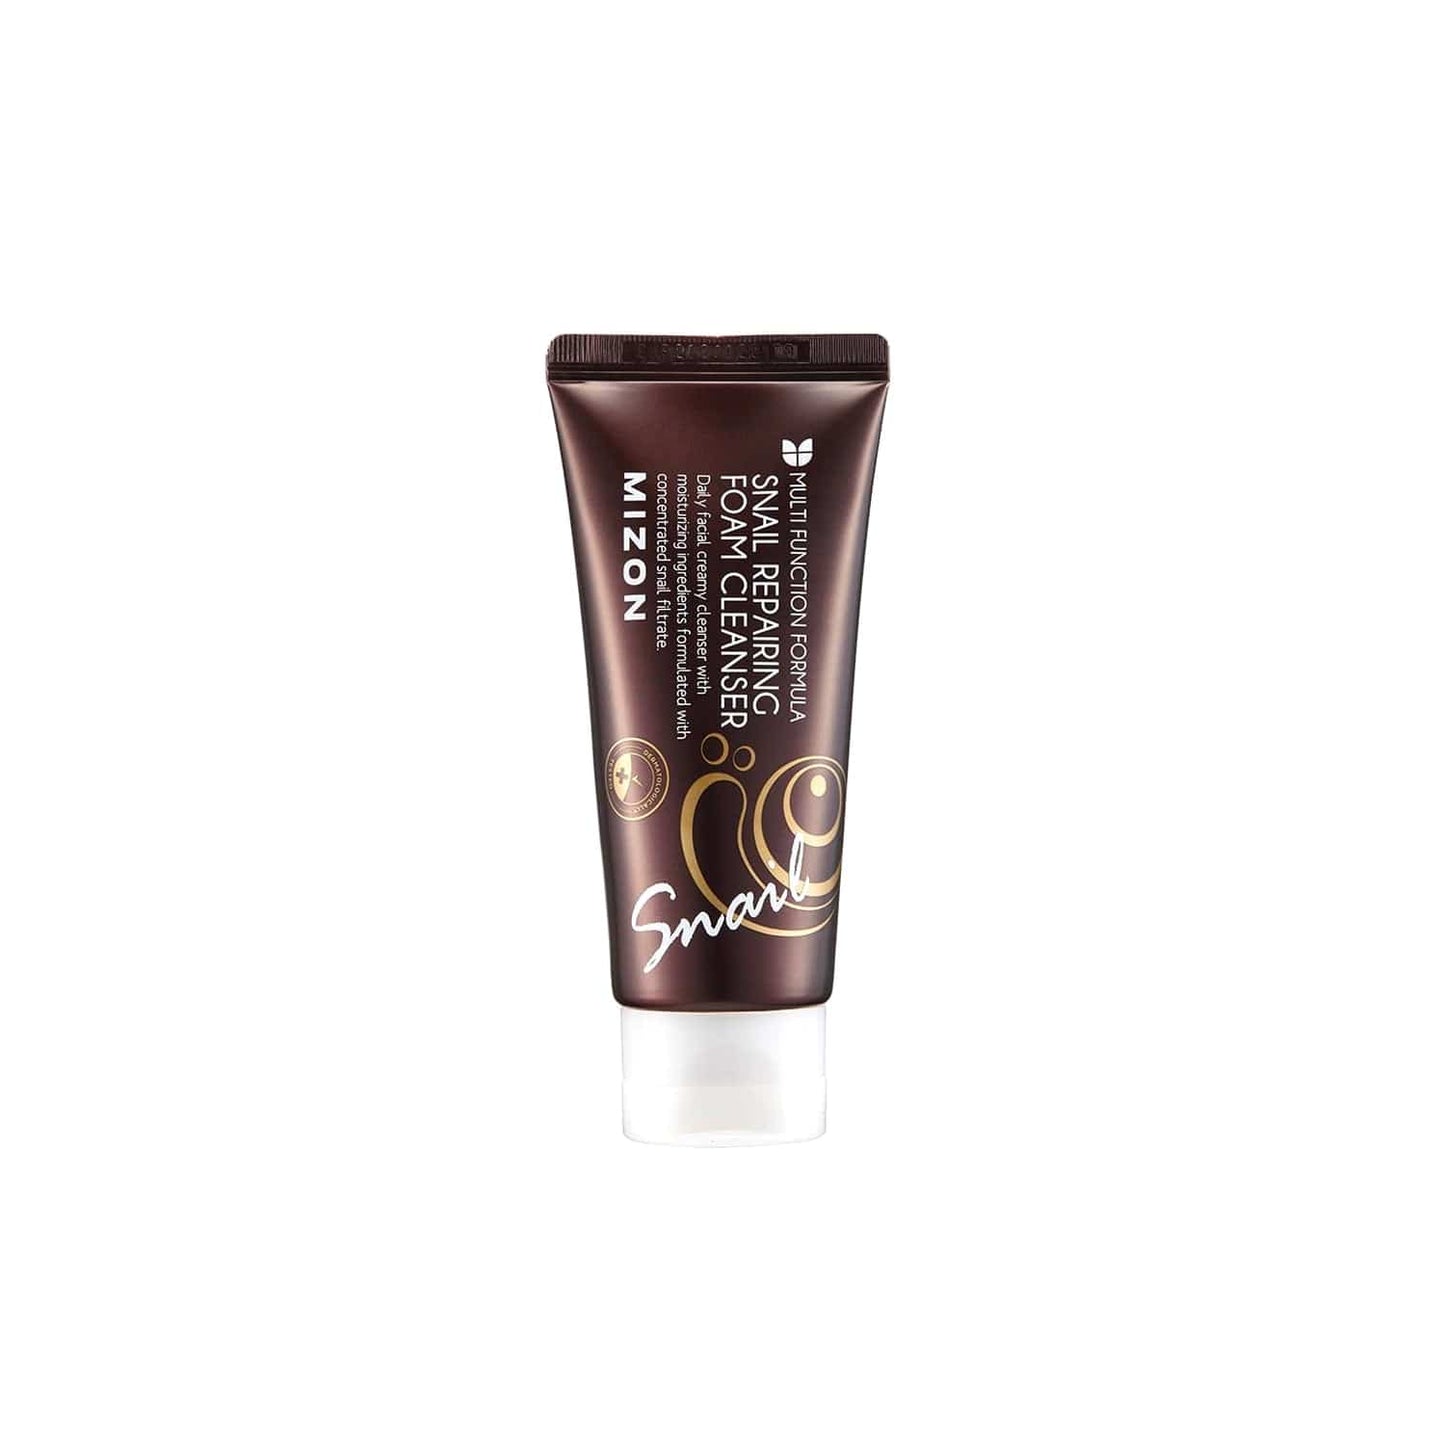 Mizon - Snail Repairing - Facial cleanser "foam cleanser" - 60 ml - Mizon - Ethni Beauty Market